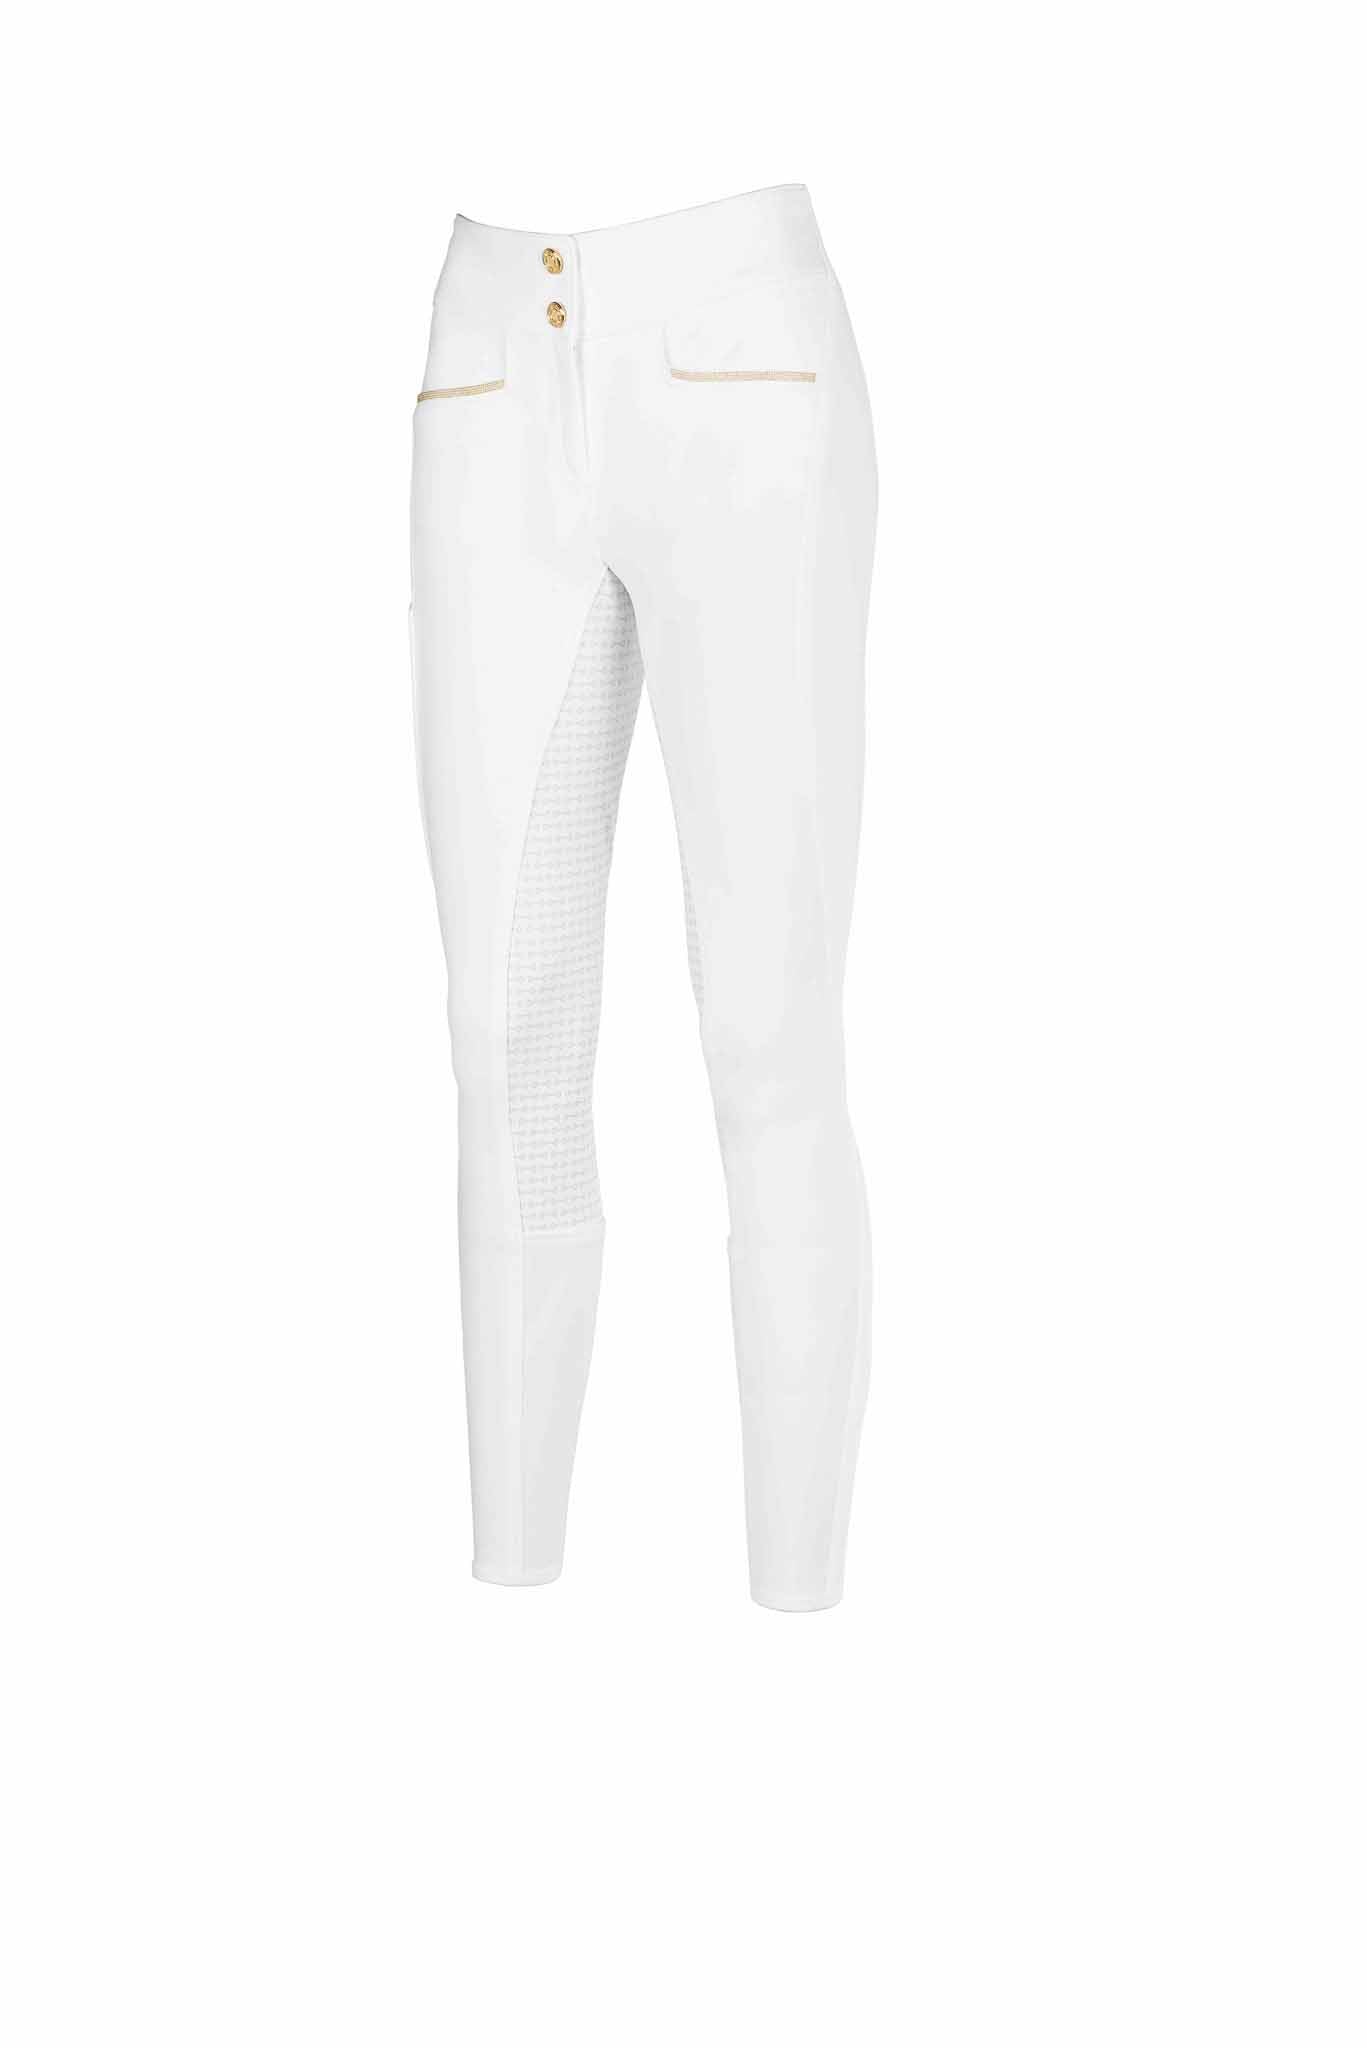 Pantalon Violette, Blanc - Pikeur Spring / Summer 2023